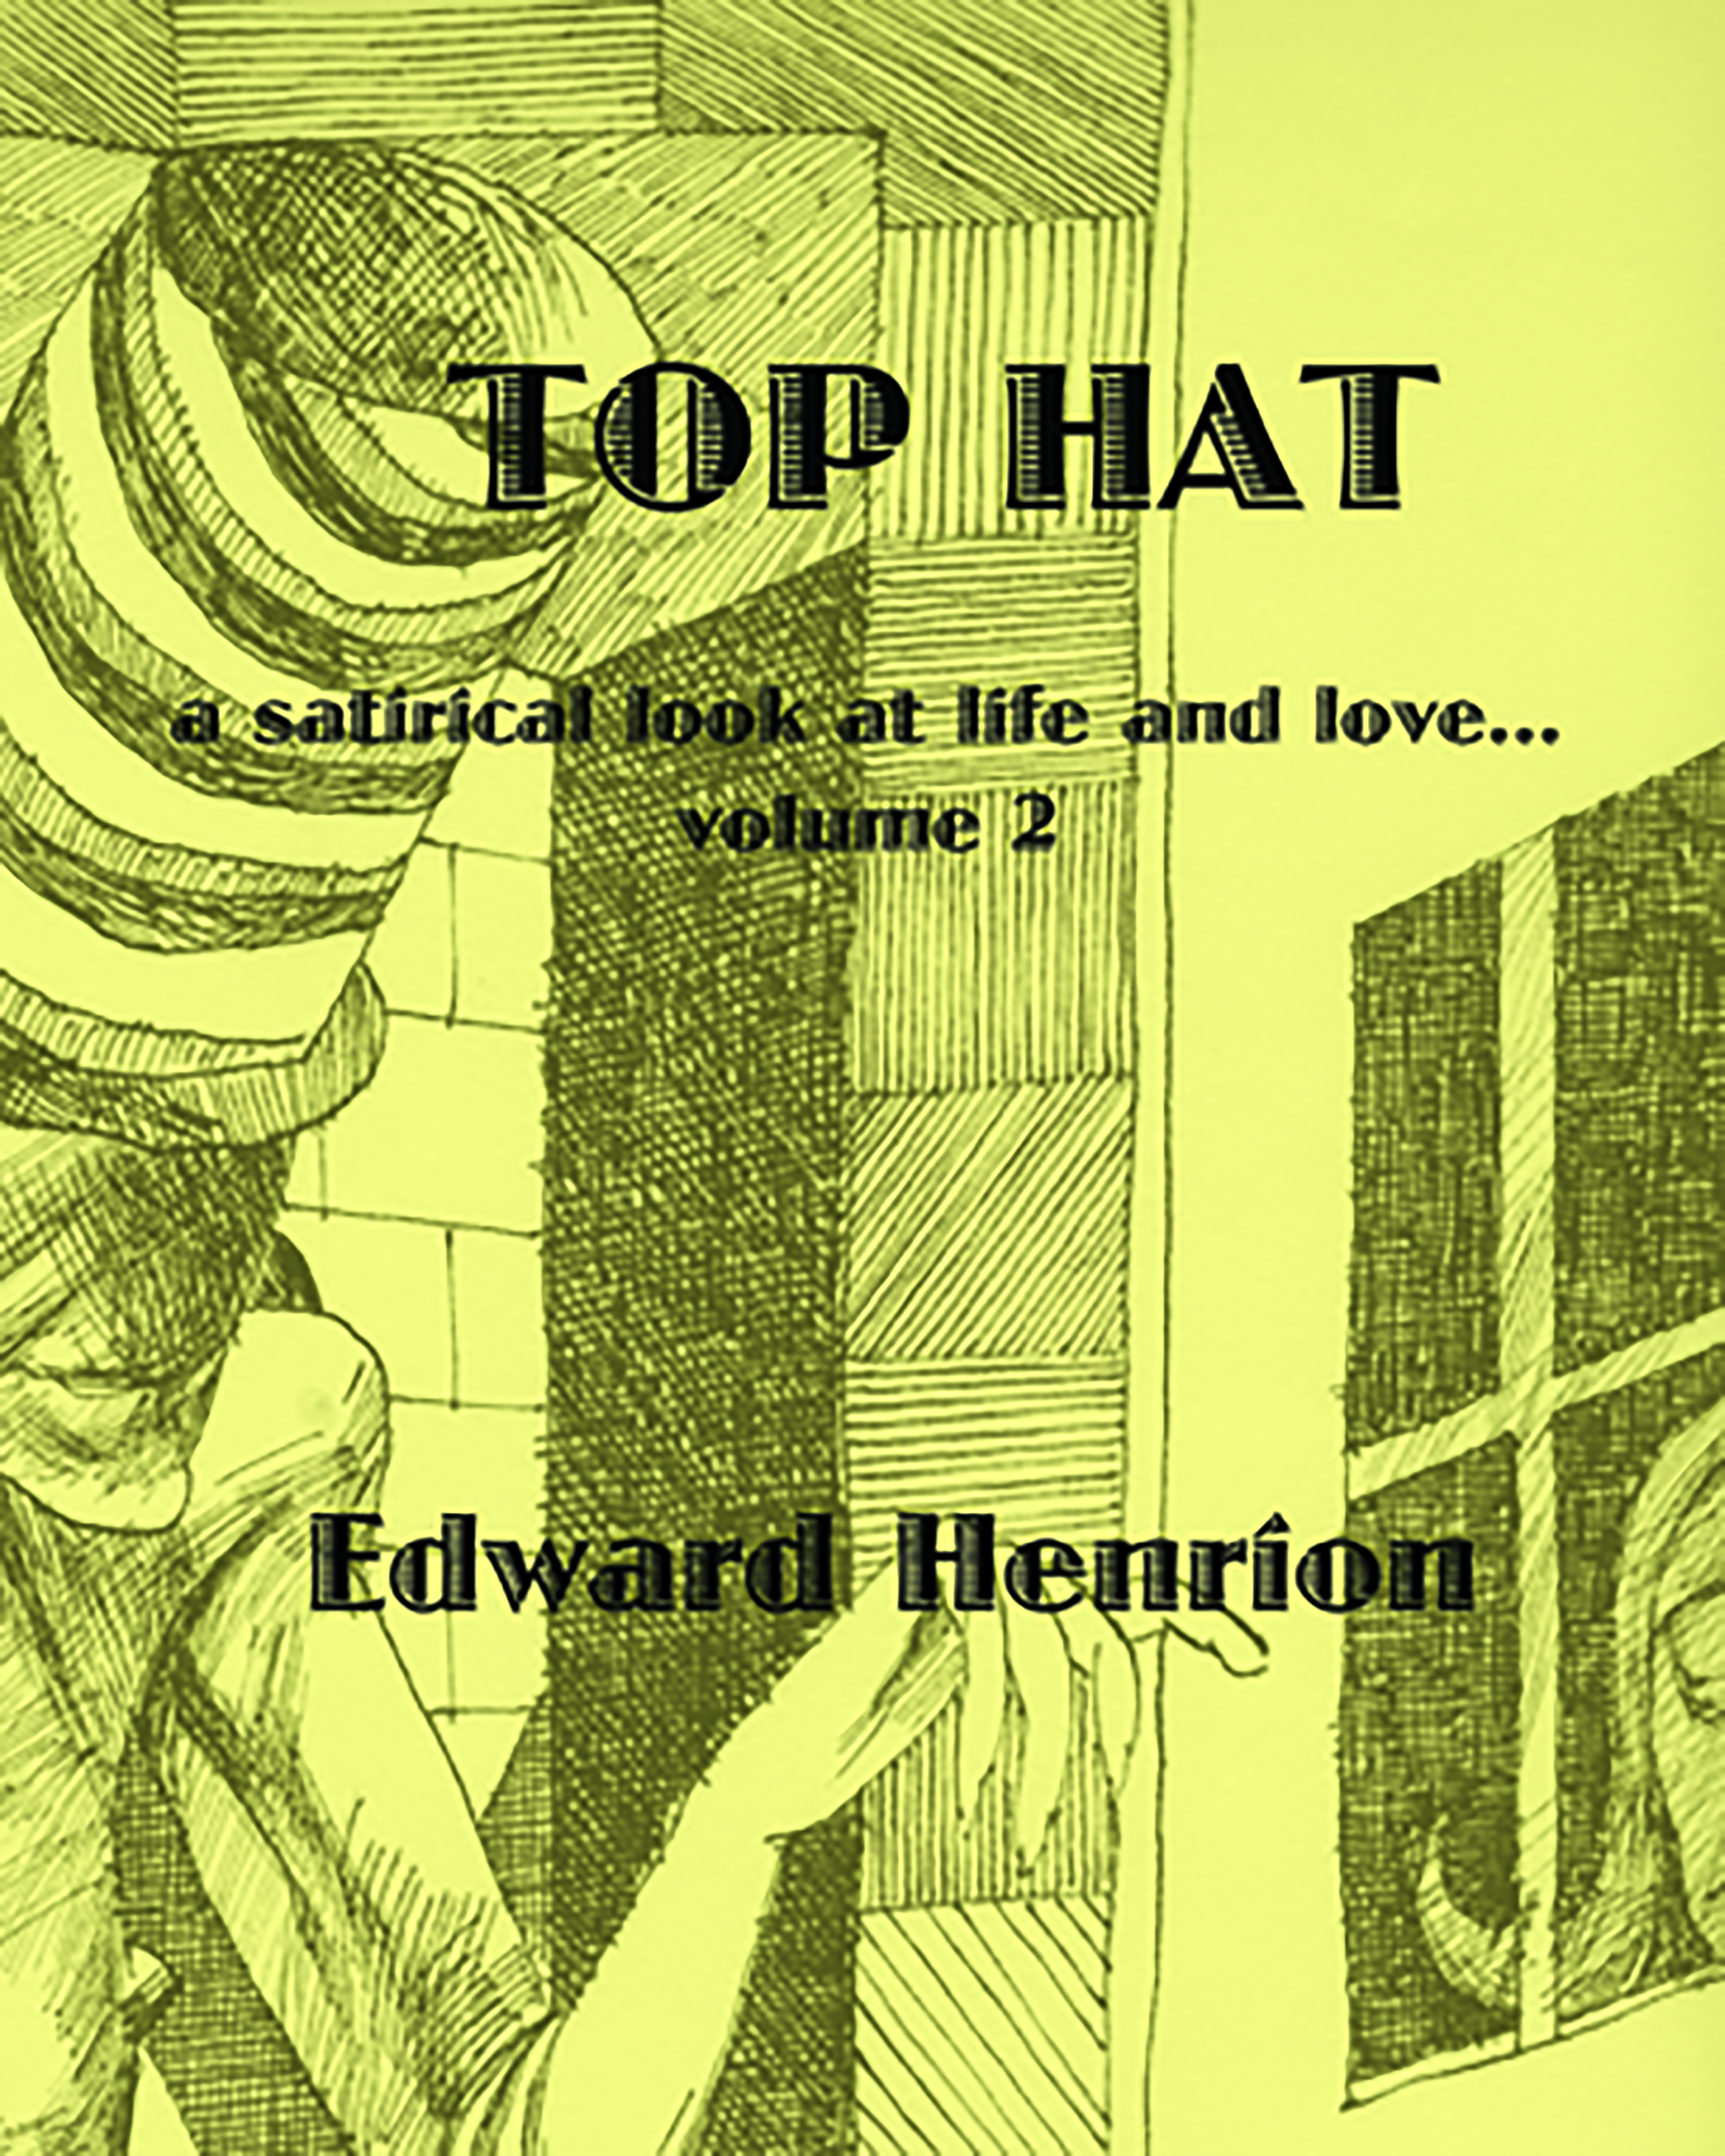 Top Hatcover-thumbnail.jpg